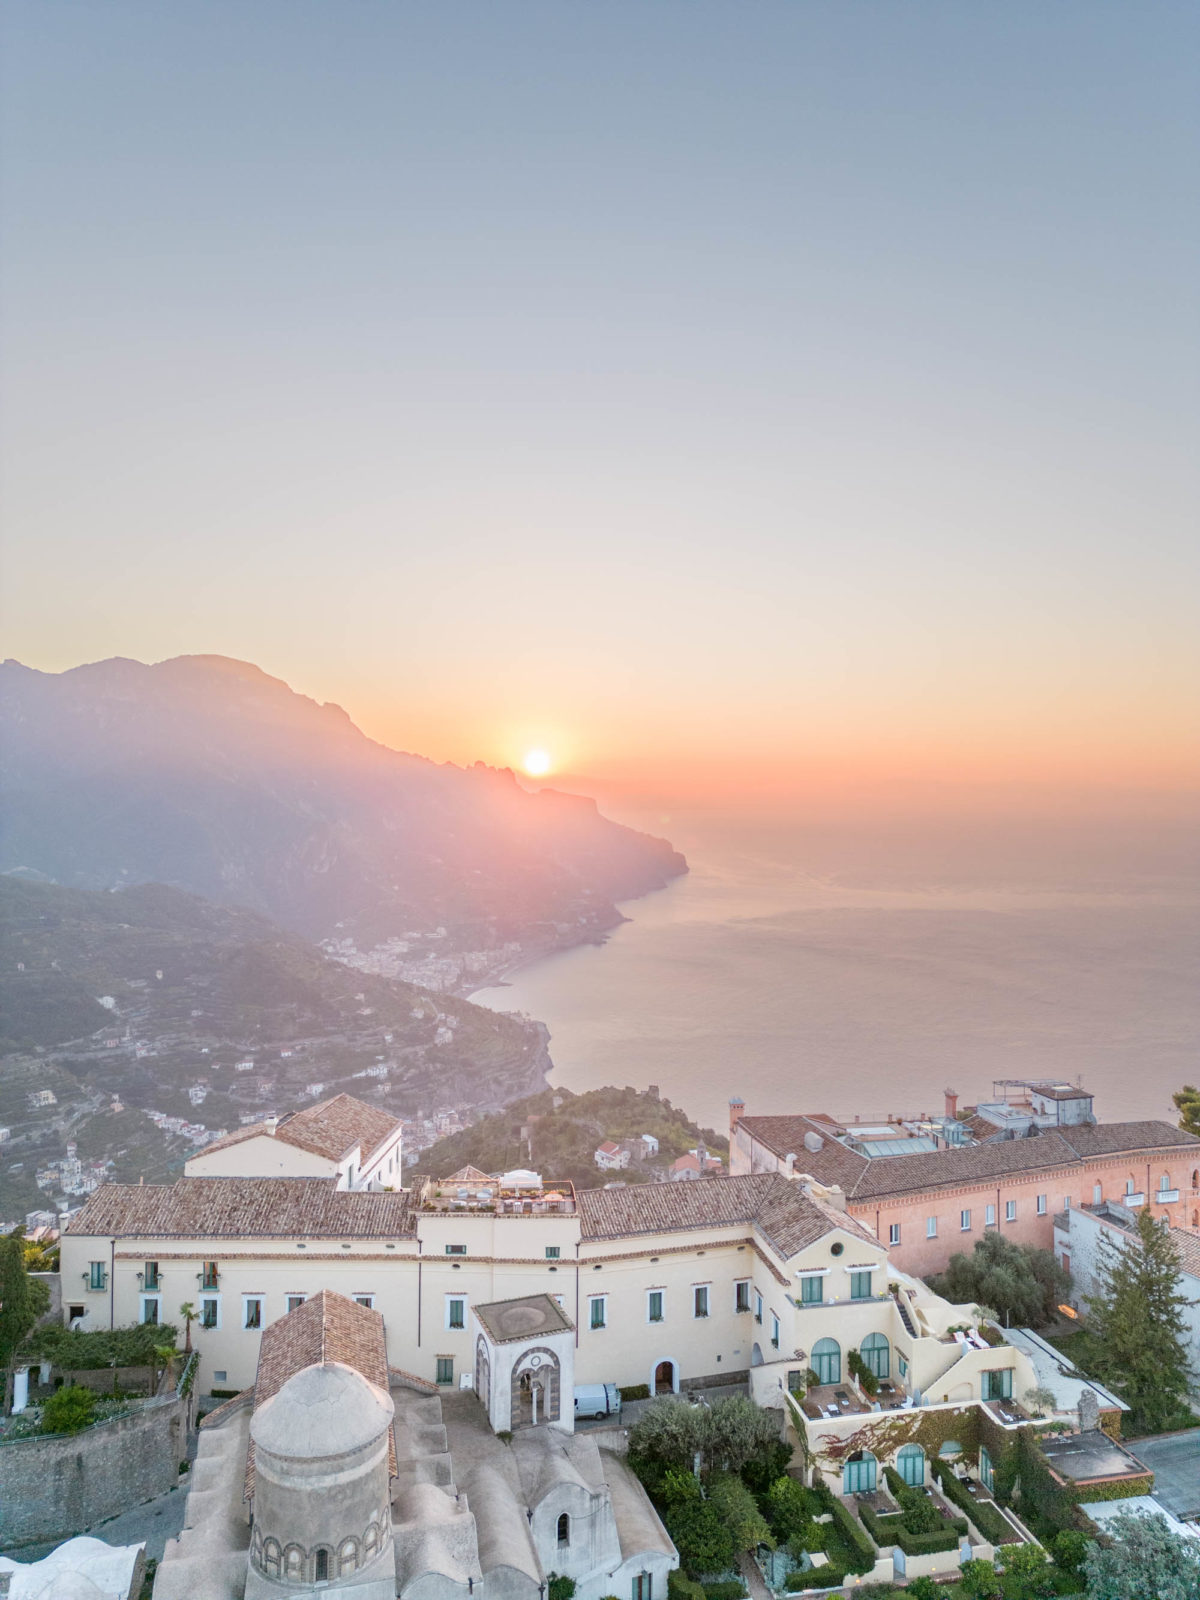 Capri Wedding Photographer | Amalfi Coast Destination Wedding | Italy Photos | Molly Carr Photography